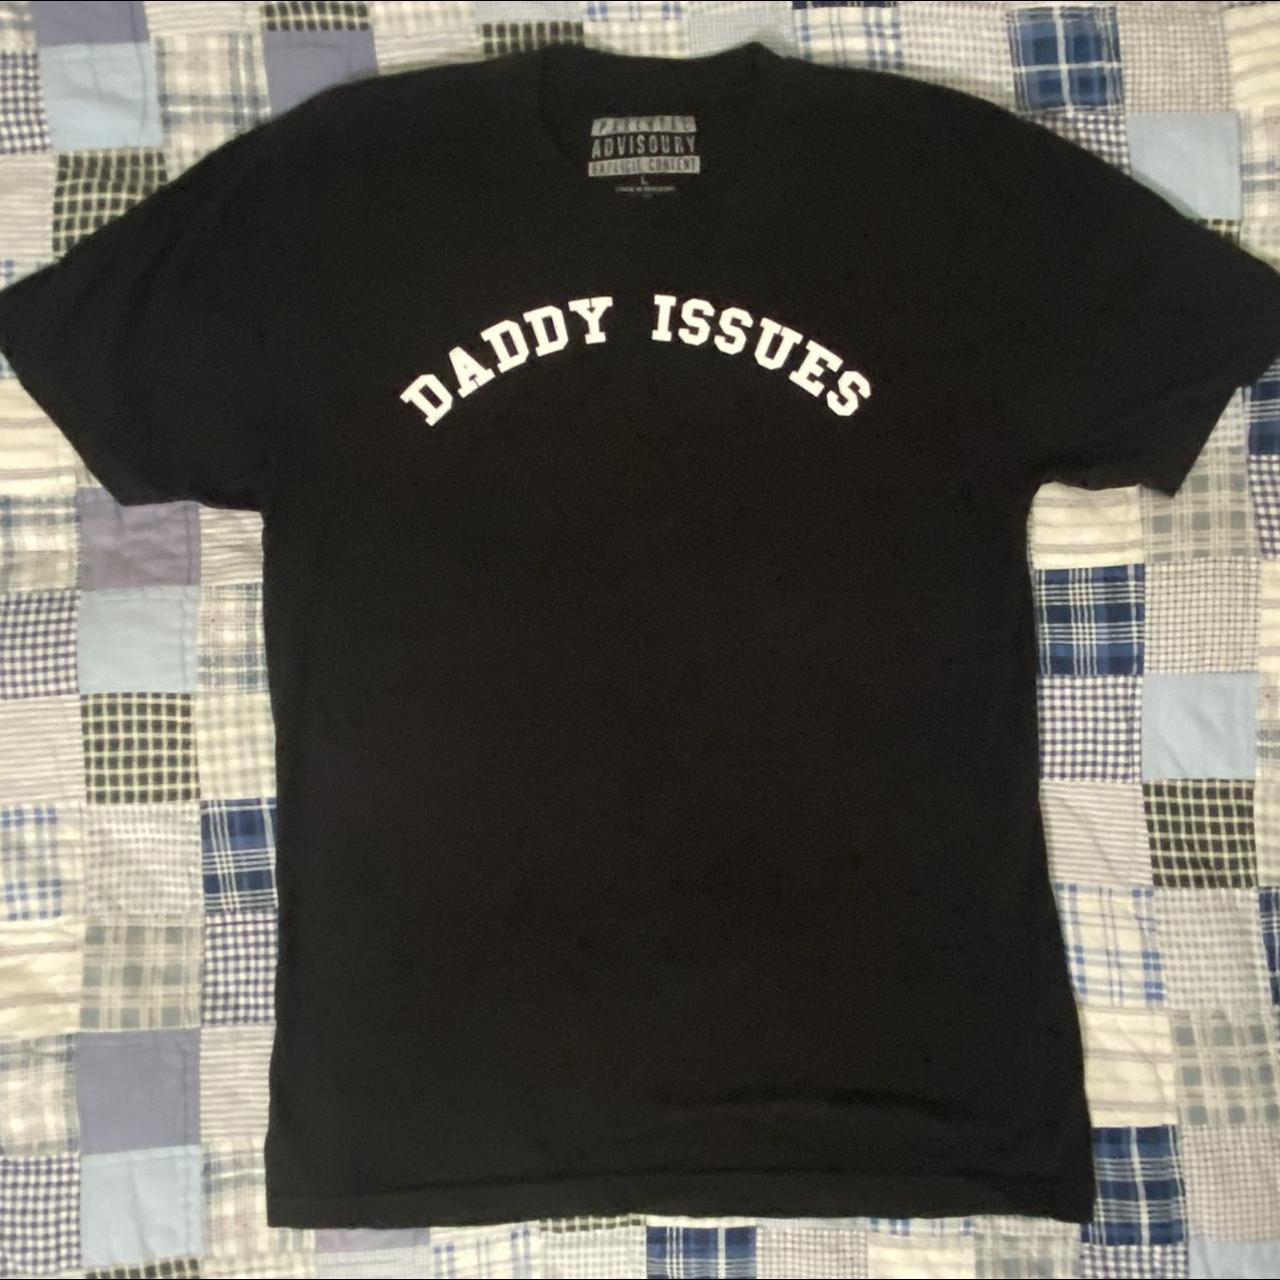 The Neighborhood T-shirt Daddy Issues T-shirt